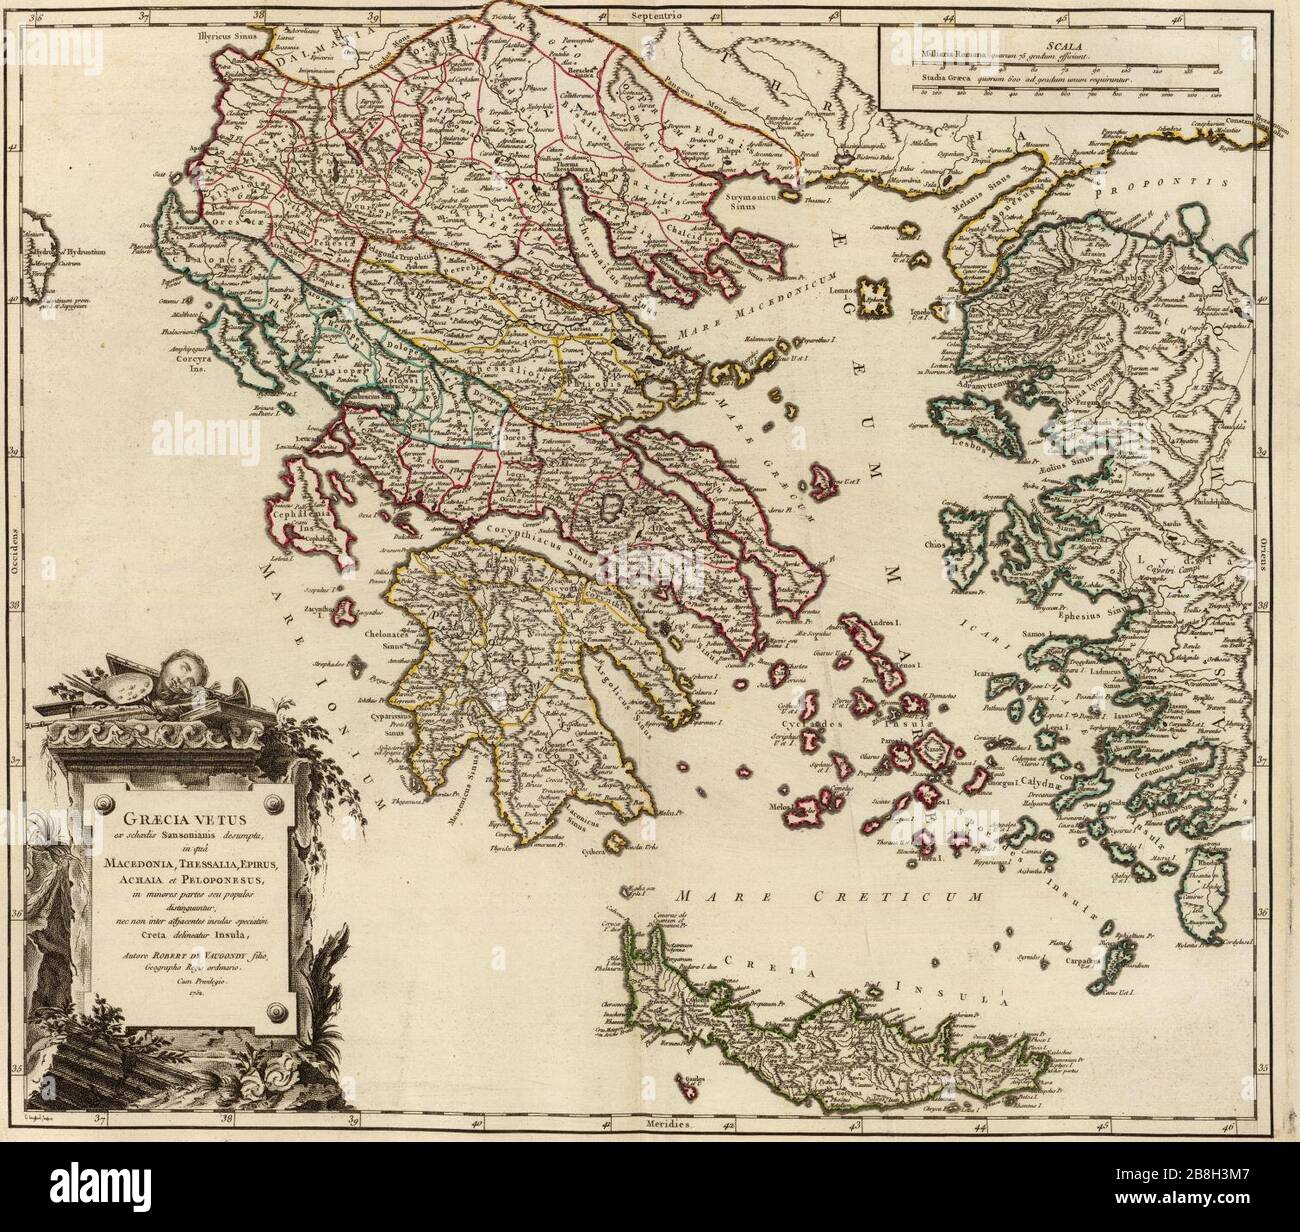 Graecia Vetus carte de la Grèce antique. Banque D'Images